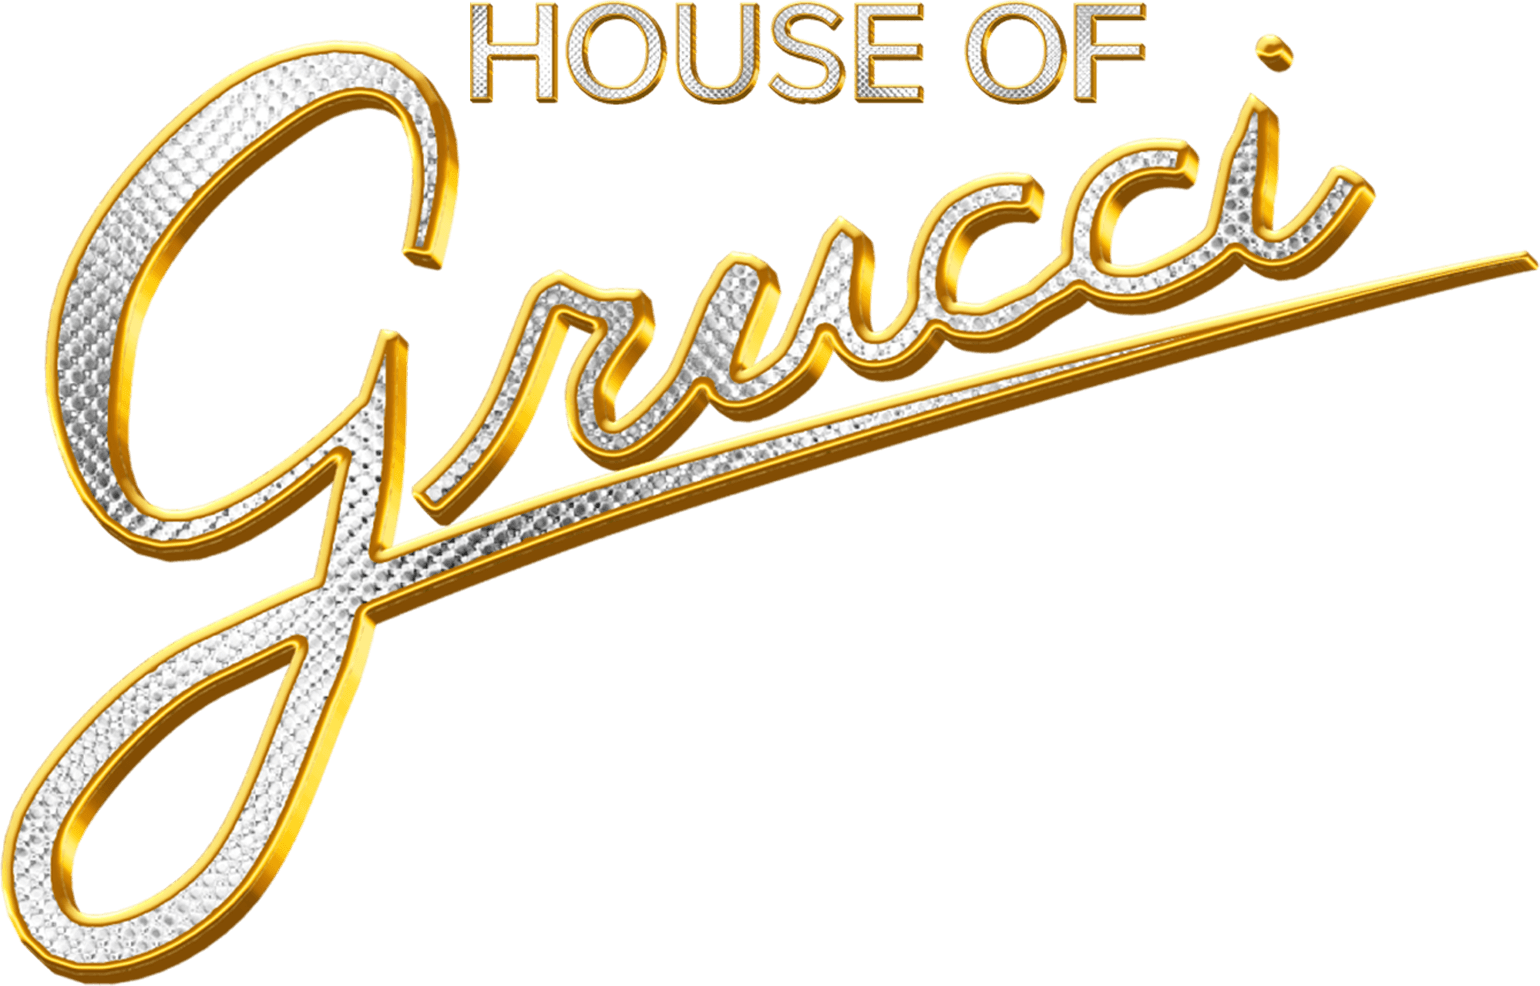 House of Grucci logo